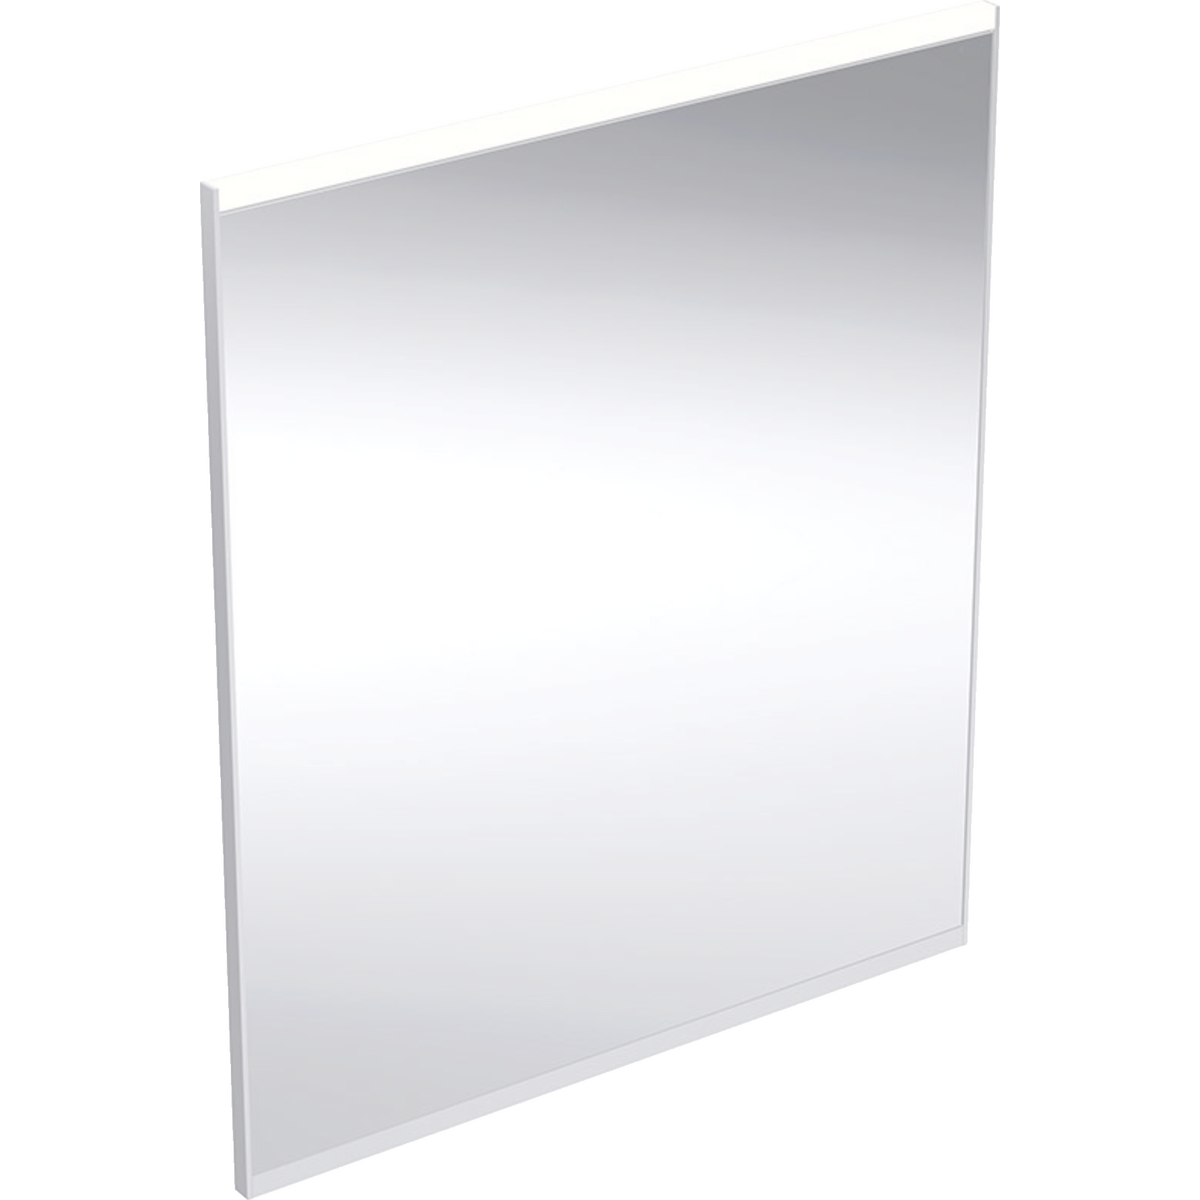 Option Plus Square illuminated mirror with lighting - 600mm